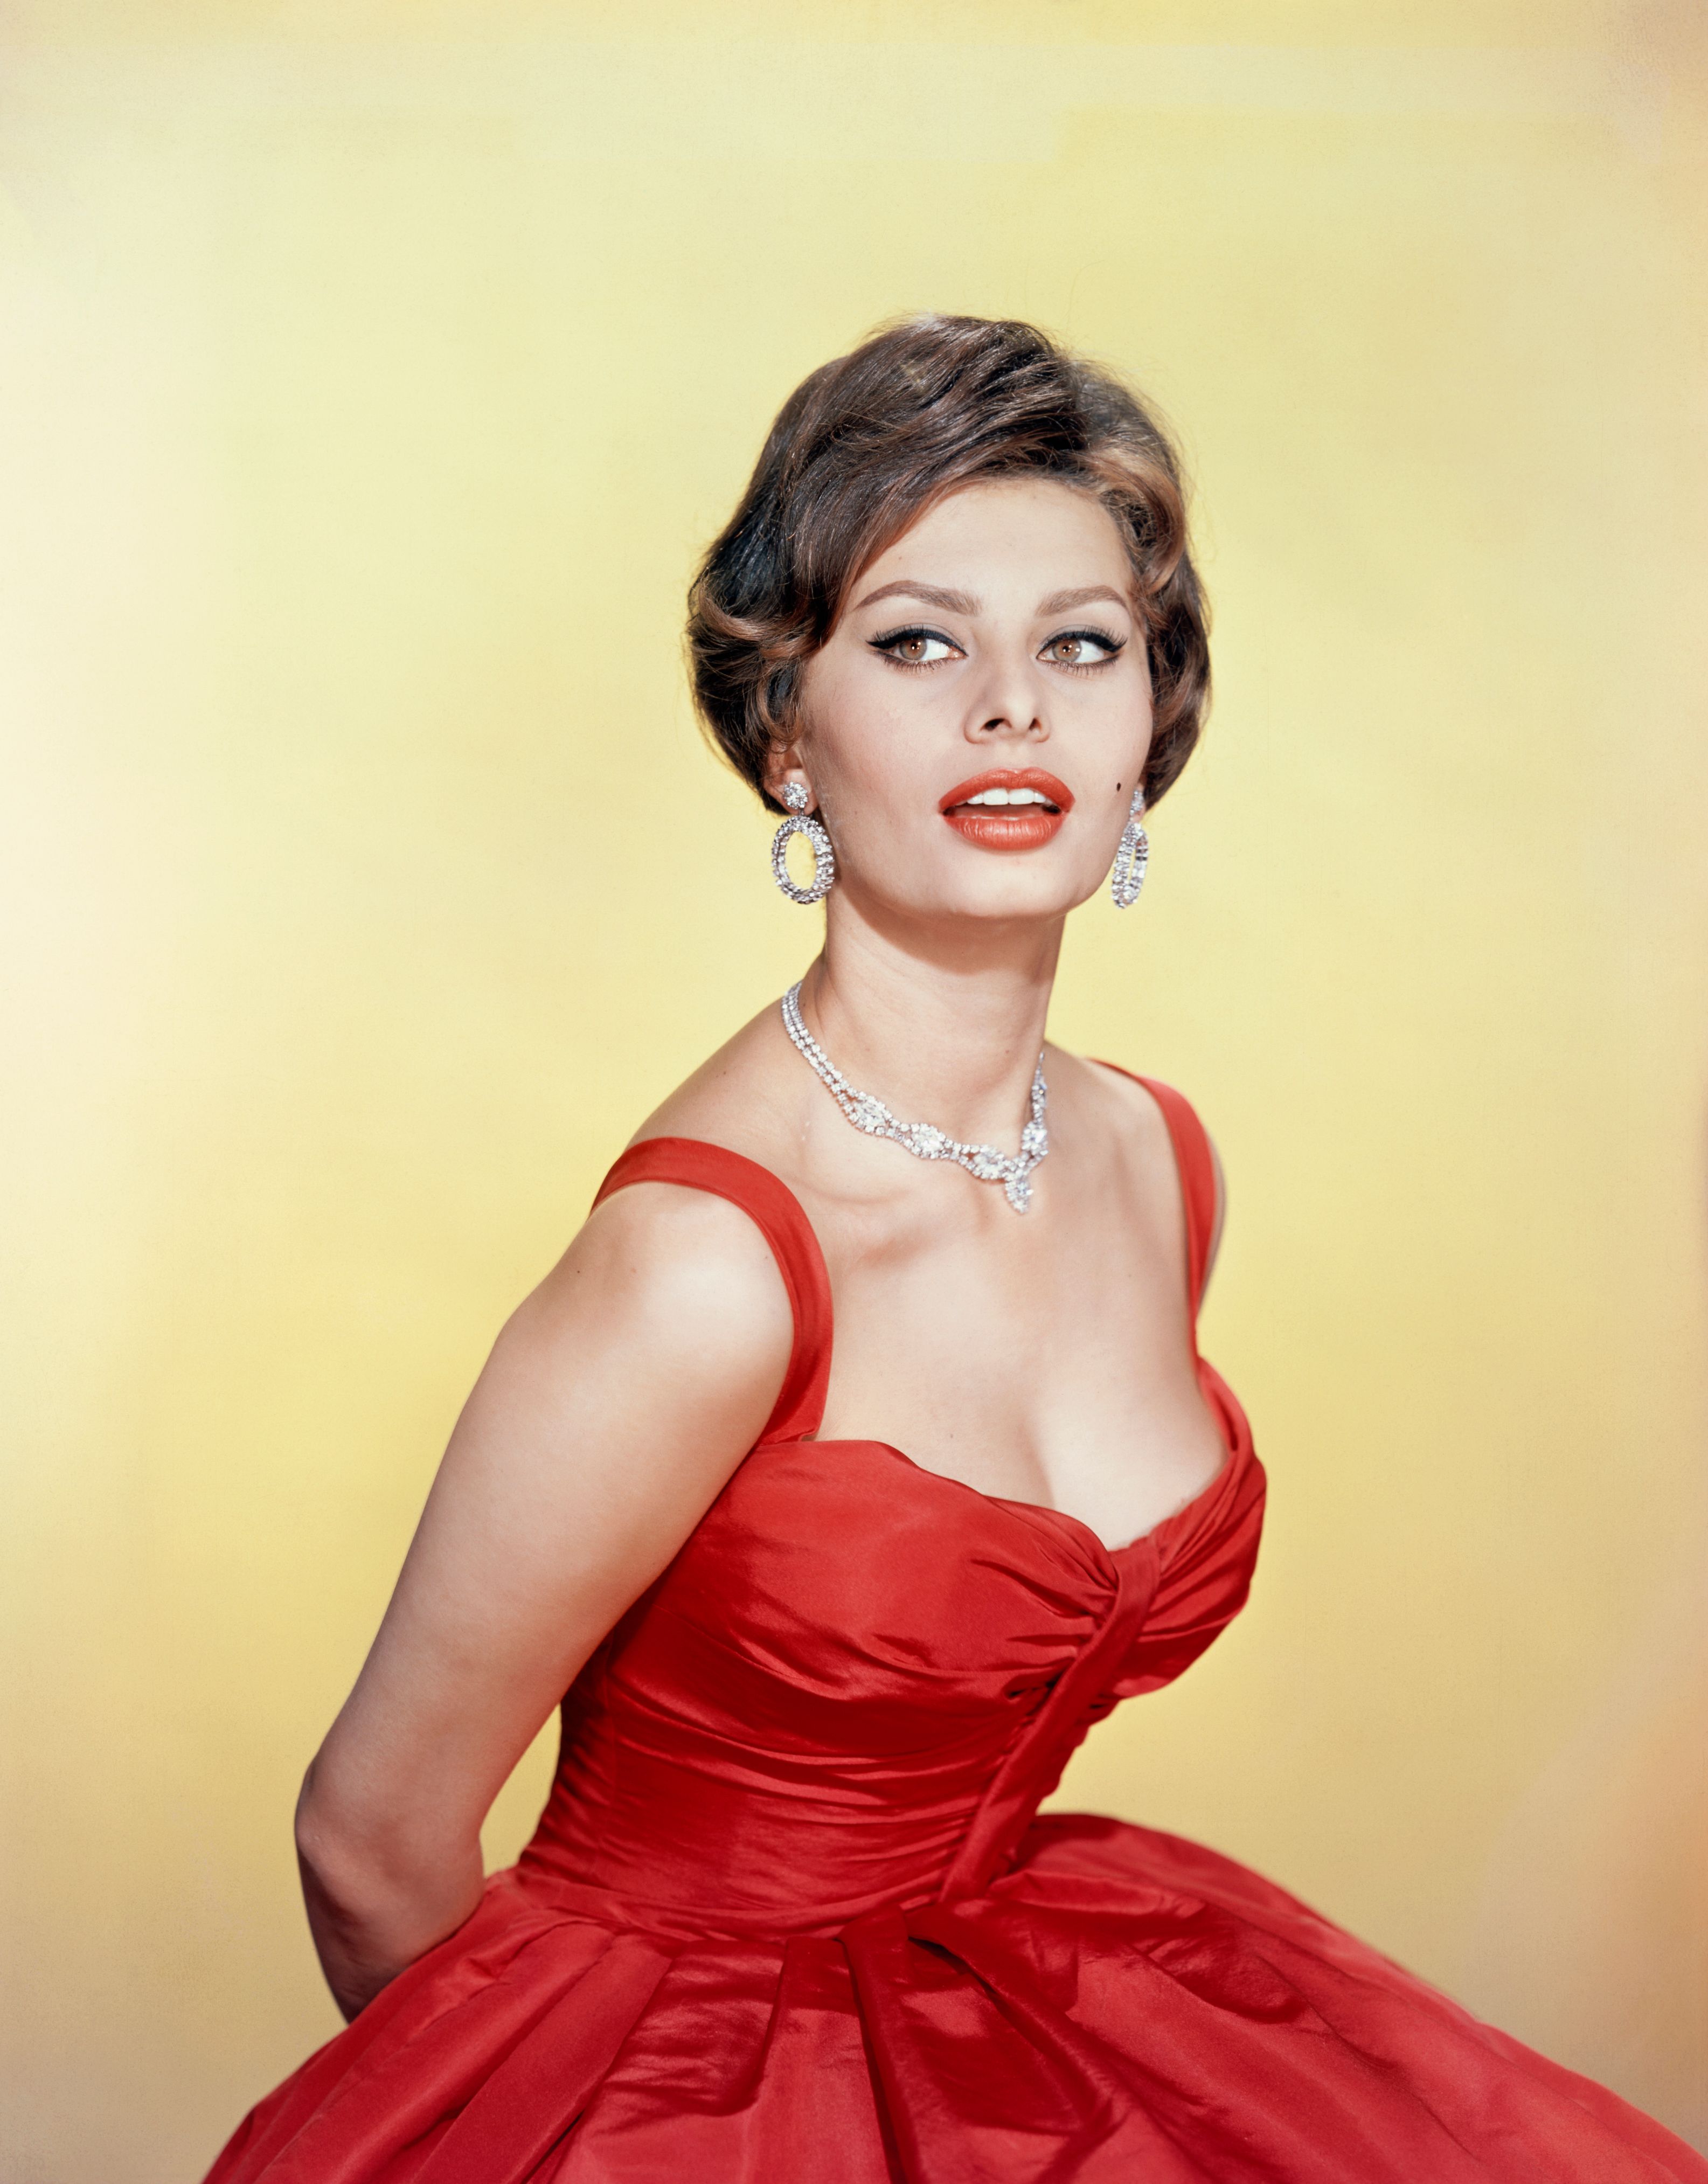 Sophia Loren poses for a portrait, circa 1934. | Source: Getty Images